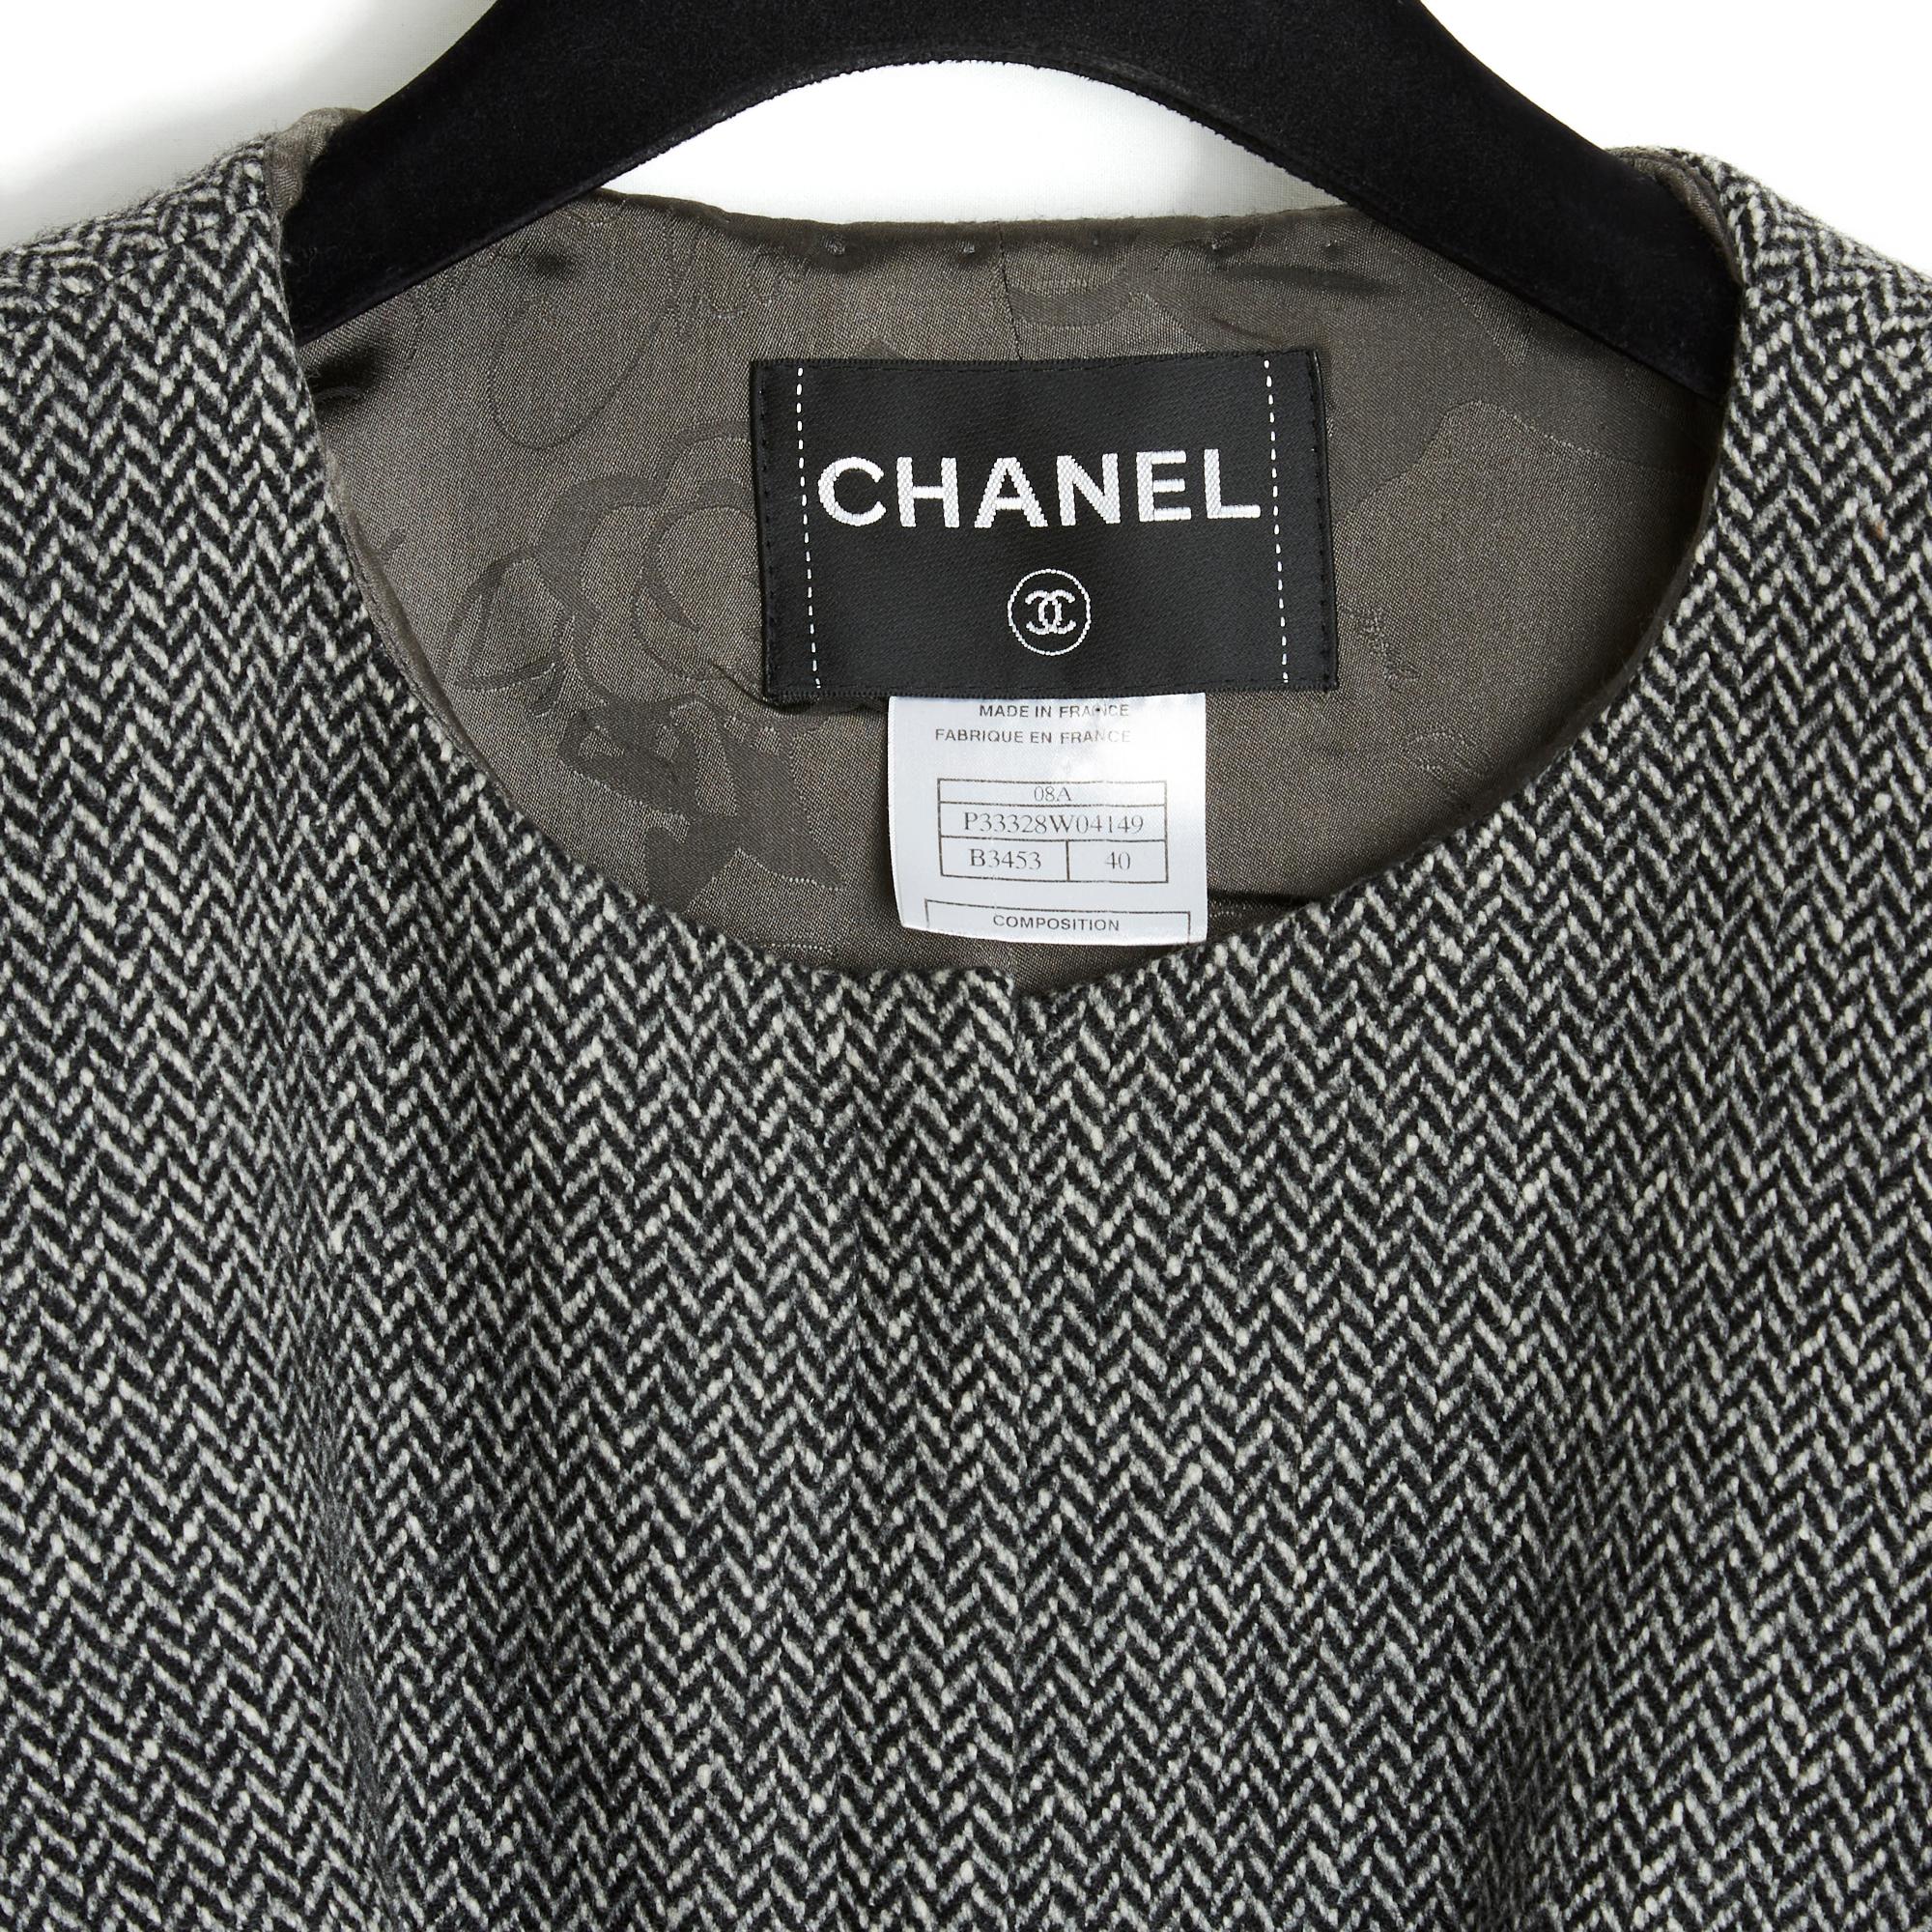 FW2008 Chanel Jacket Chevrons Grey Jewelled FR38 2